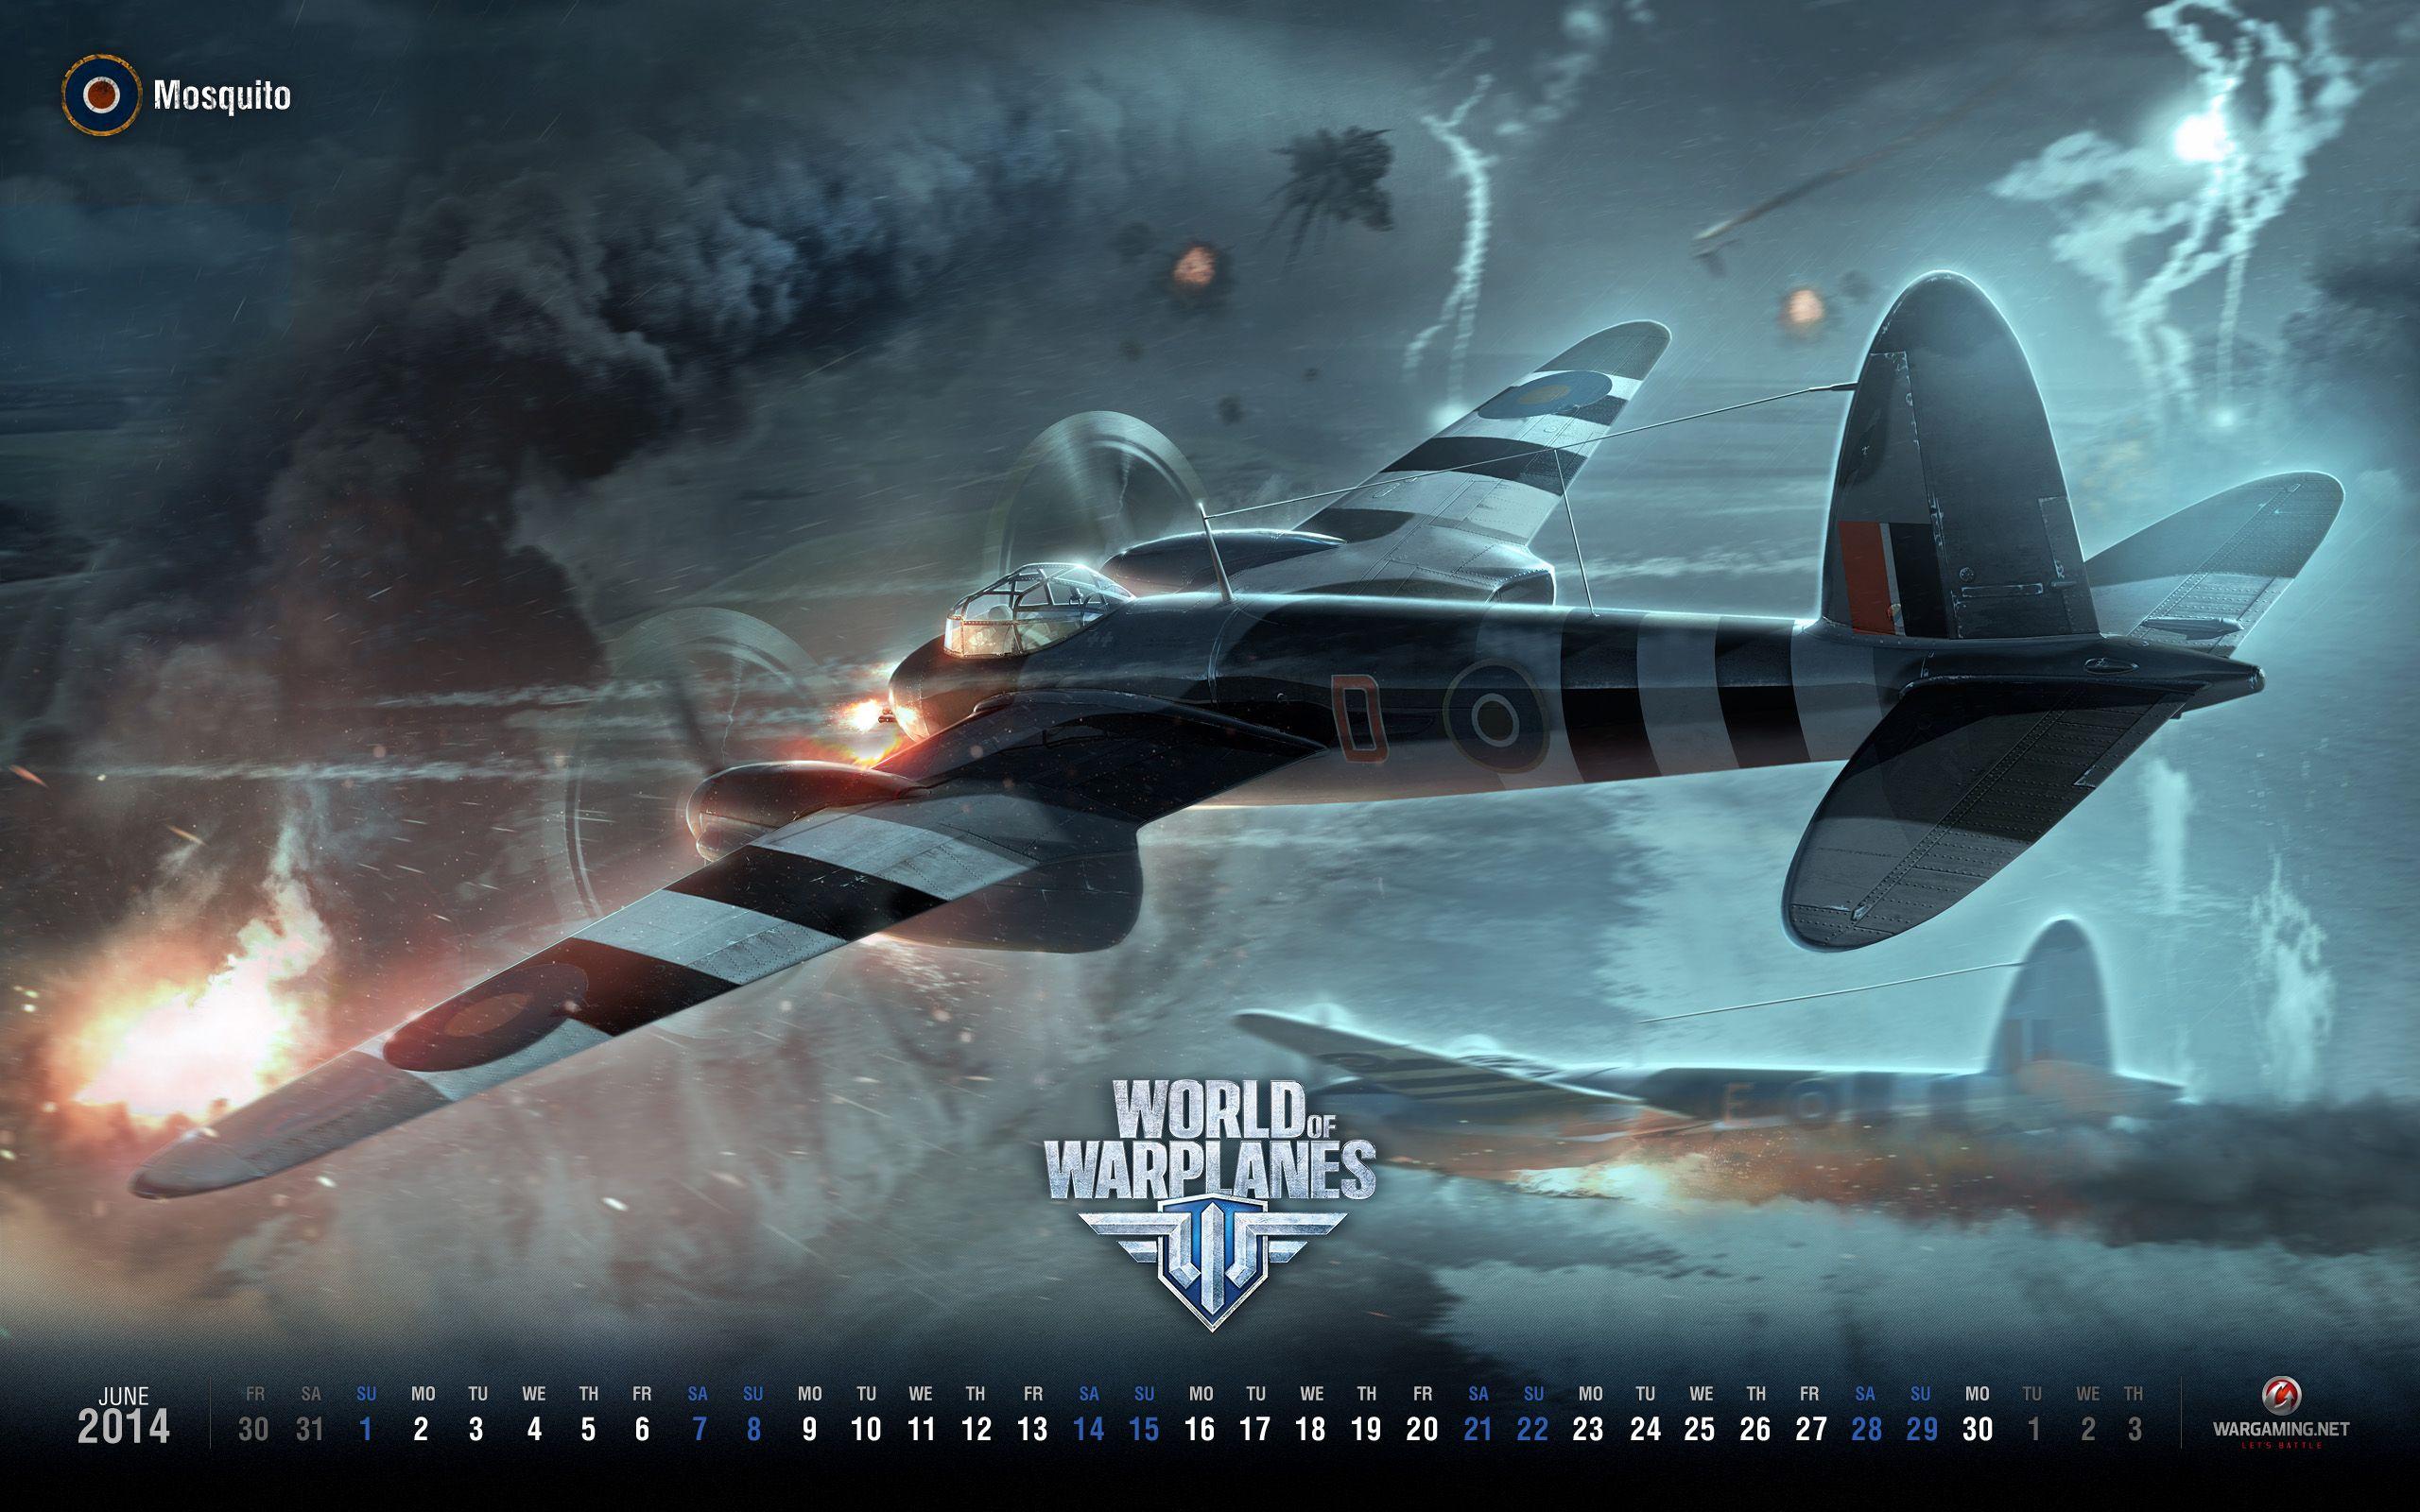 June 2014 Wallpaper and Calendar. World of Warplanes